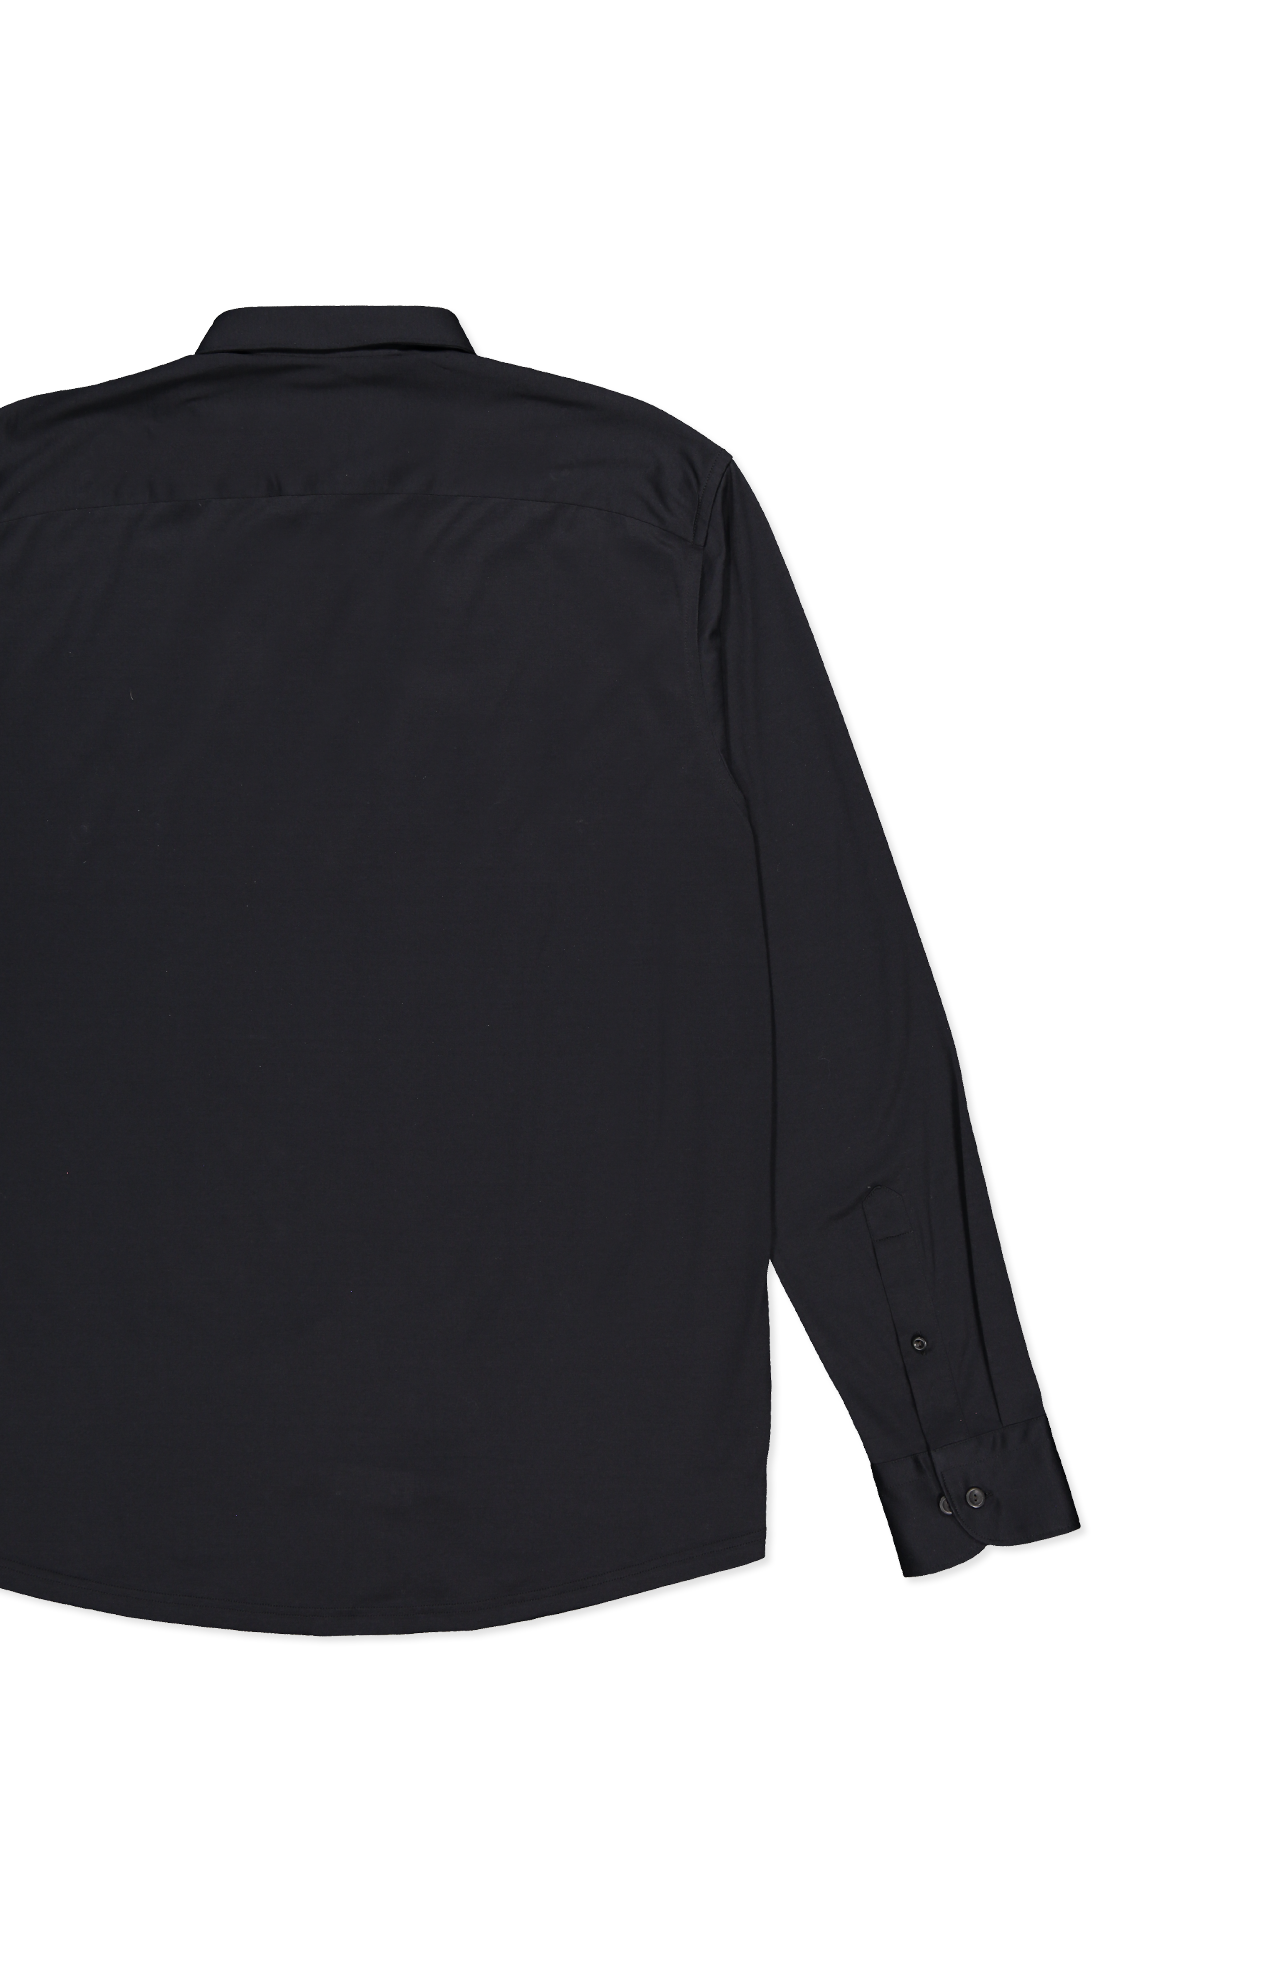 Eton Jersey Contemporary Shirt in Black - Back Detail Image (6919758315635)